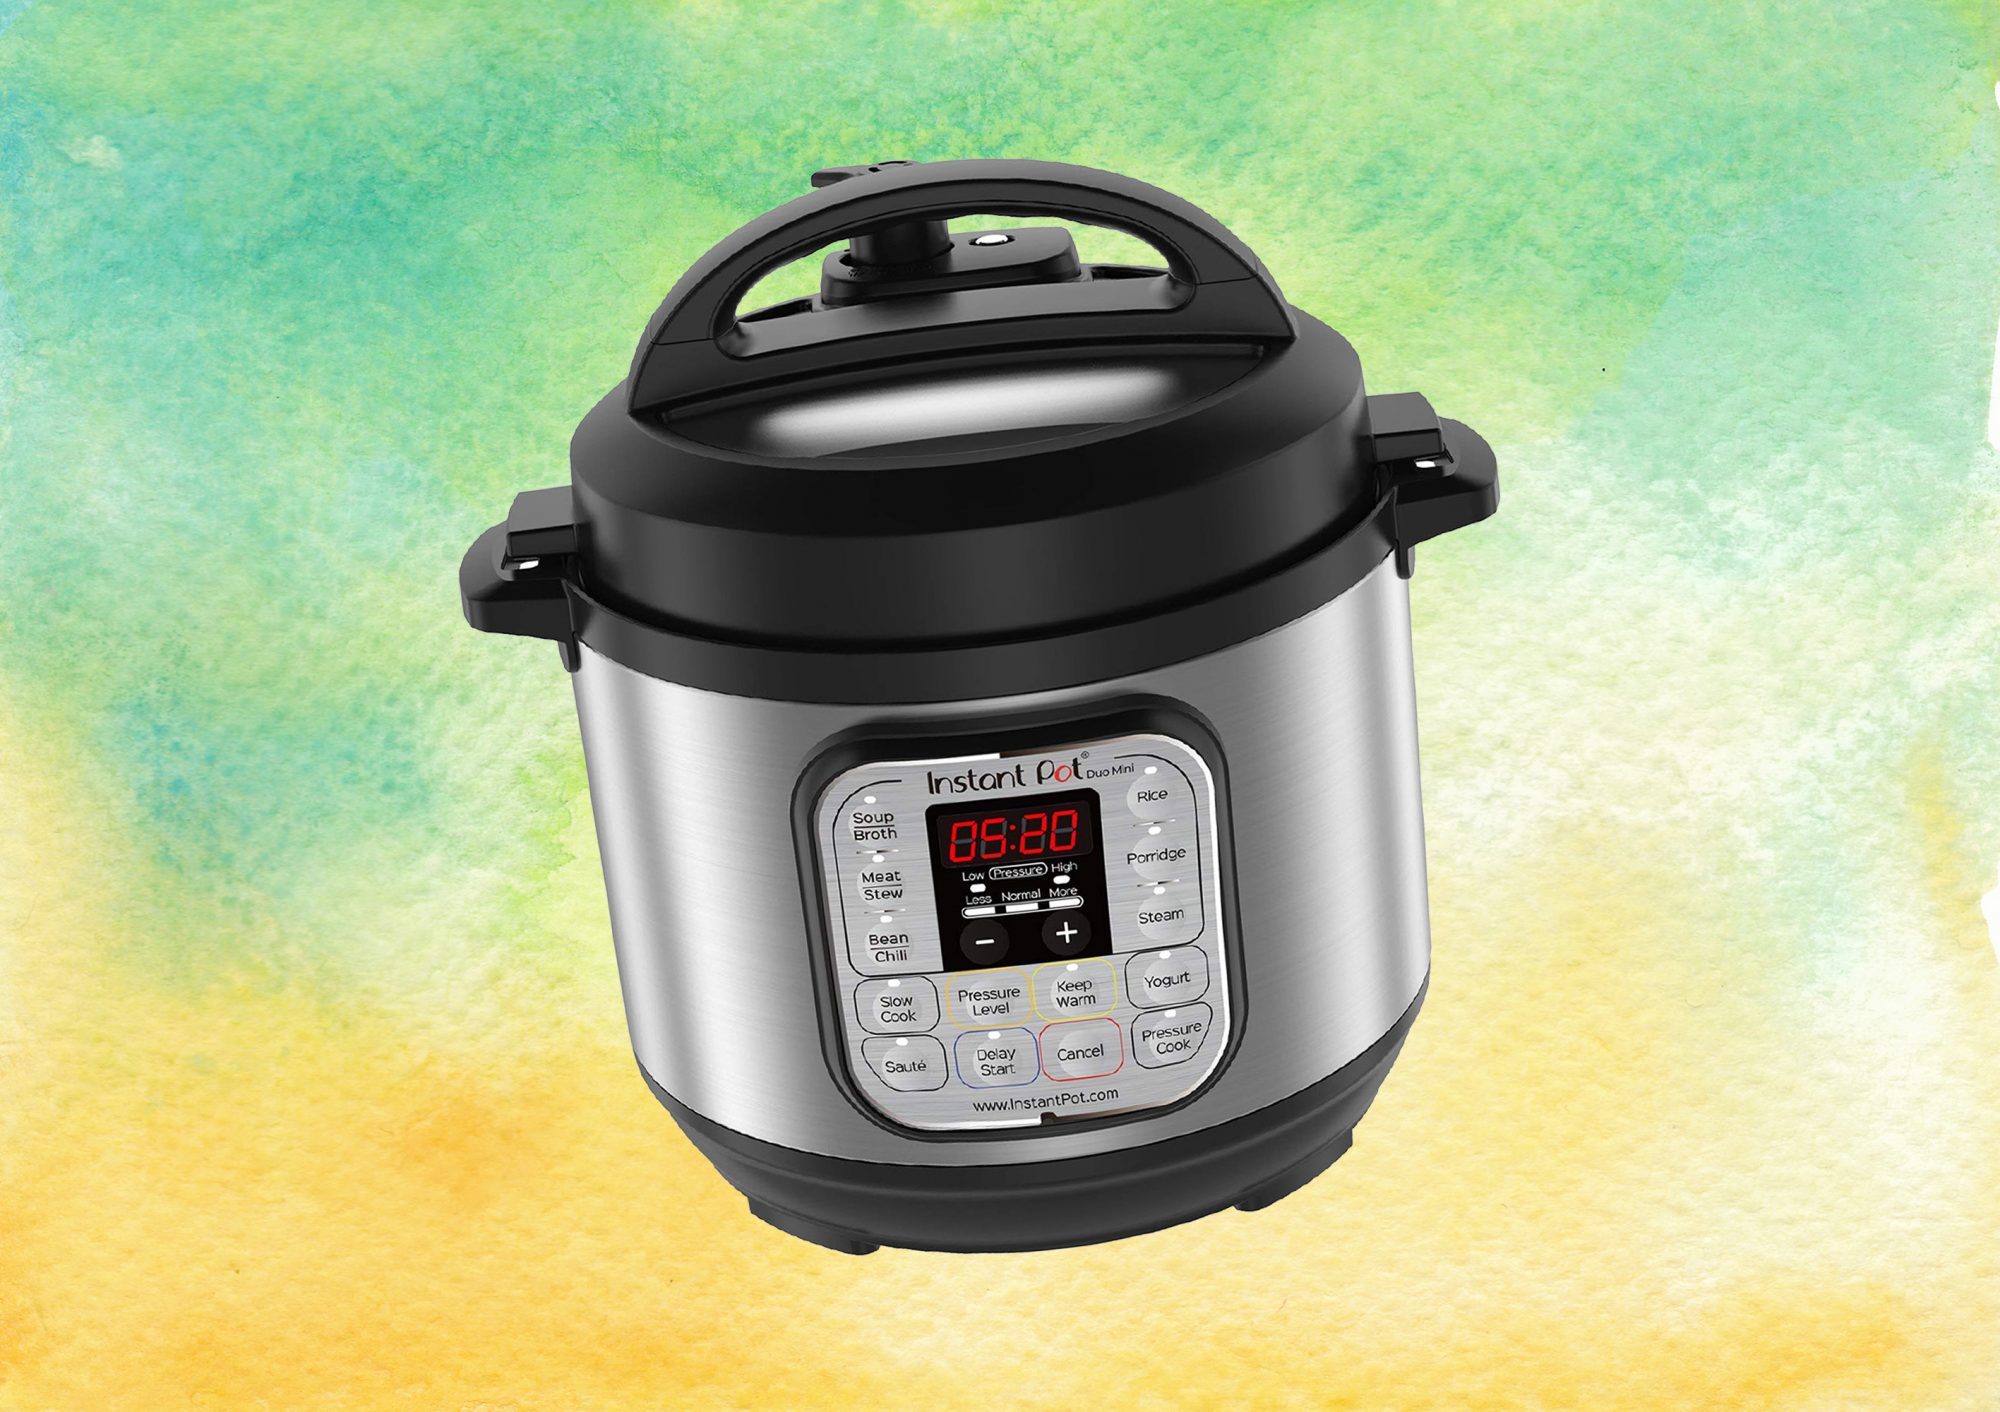 No need for Instant Pot tax, this massive 10-qt. Crock-Pot Multi Cooker is  now $65 (Reg. $150)